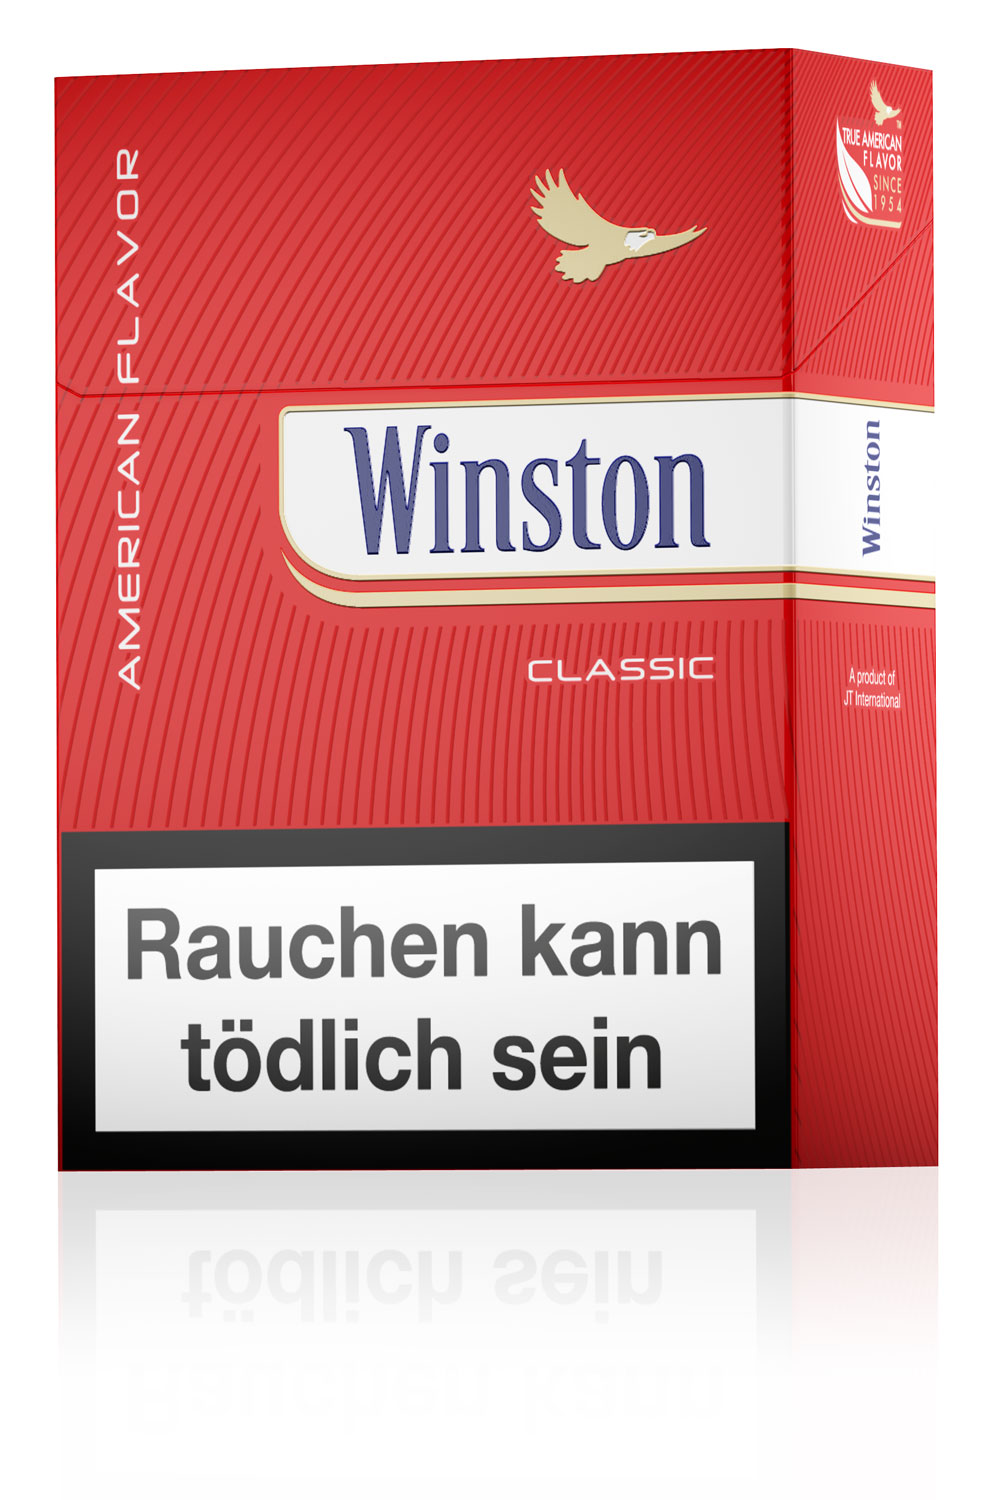 Winston packaging